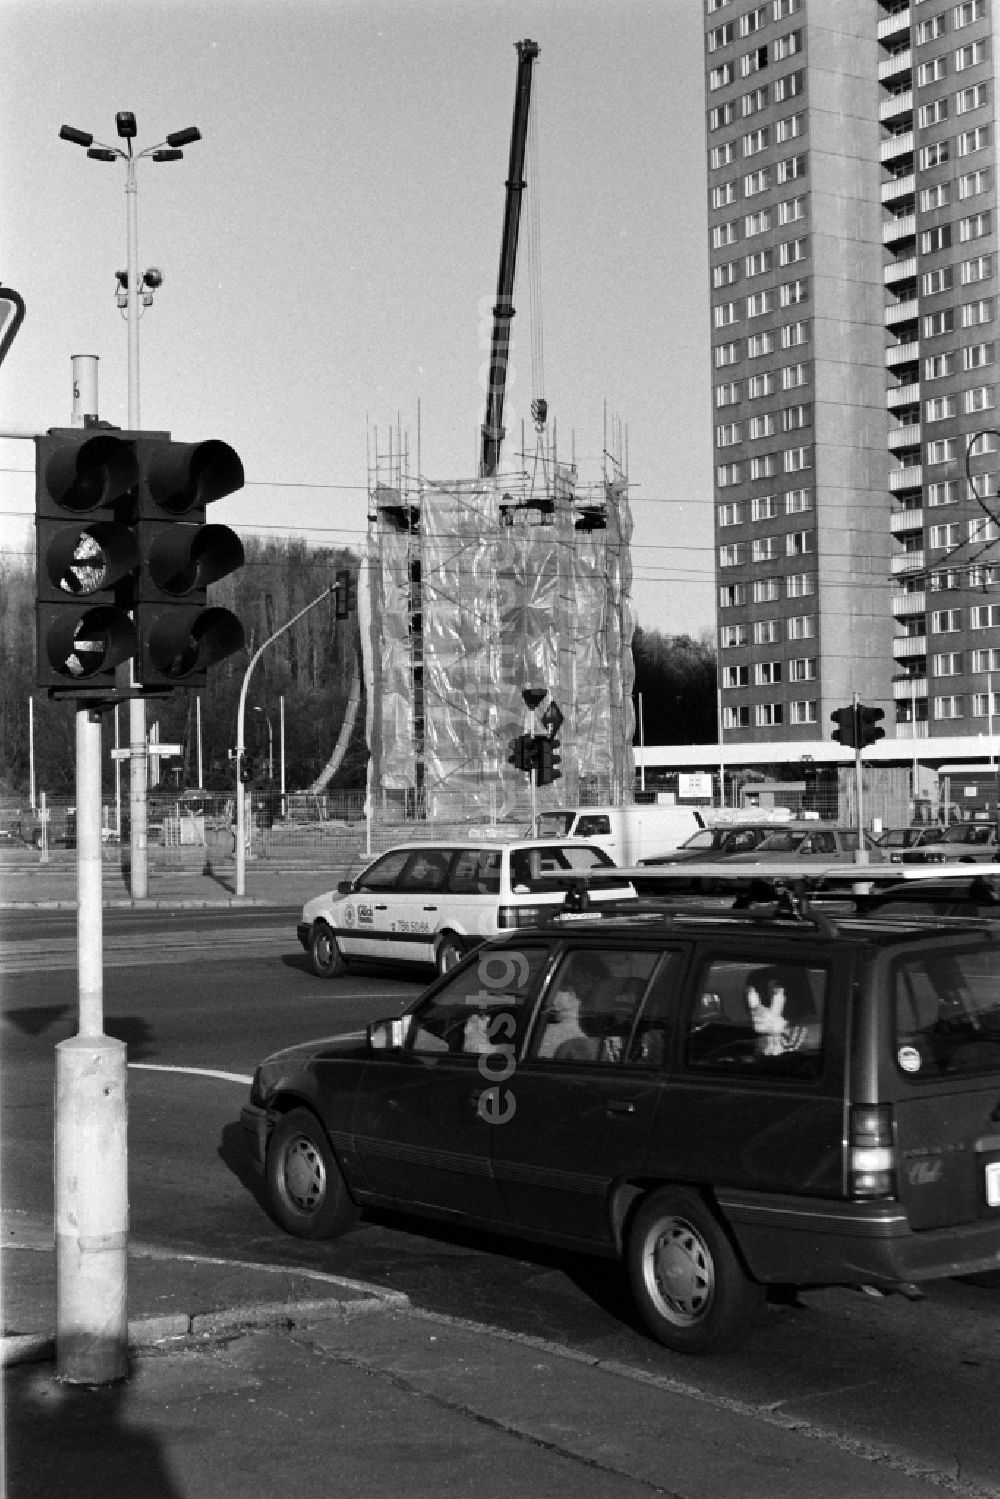 GDR photo archive: Berlin - Last demolition works on the Lenin monument on the Leninplatz (today Platz der Vereinten Nationen) in Berlin - Friedrichshain, the former capital of the GDR, German Democratic Republic